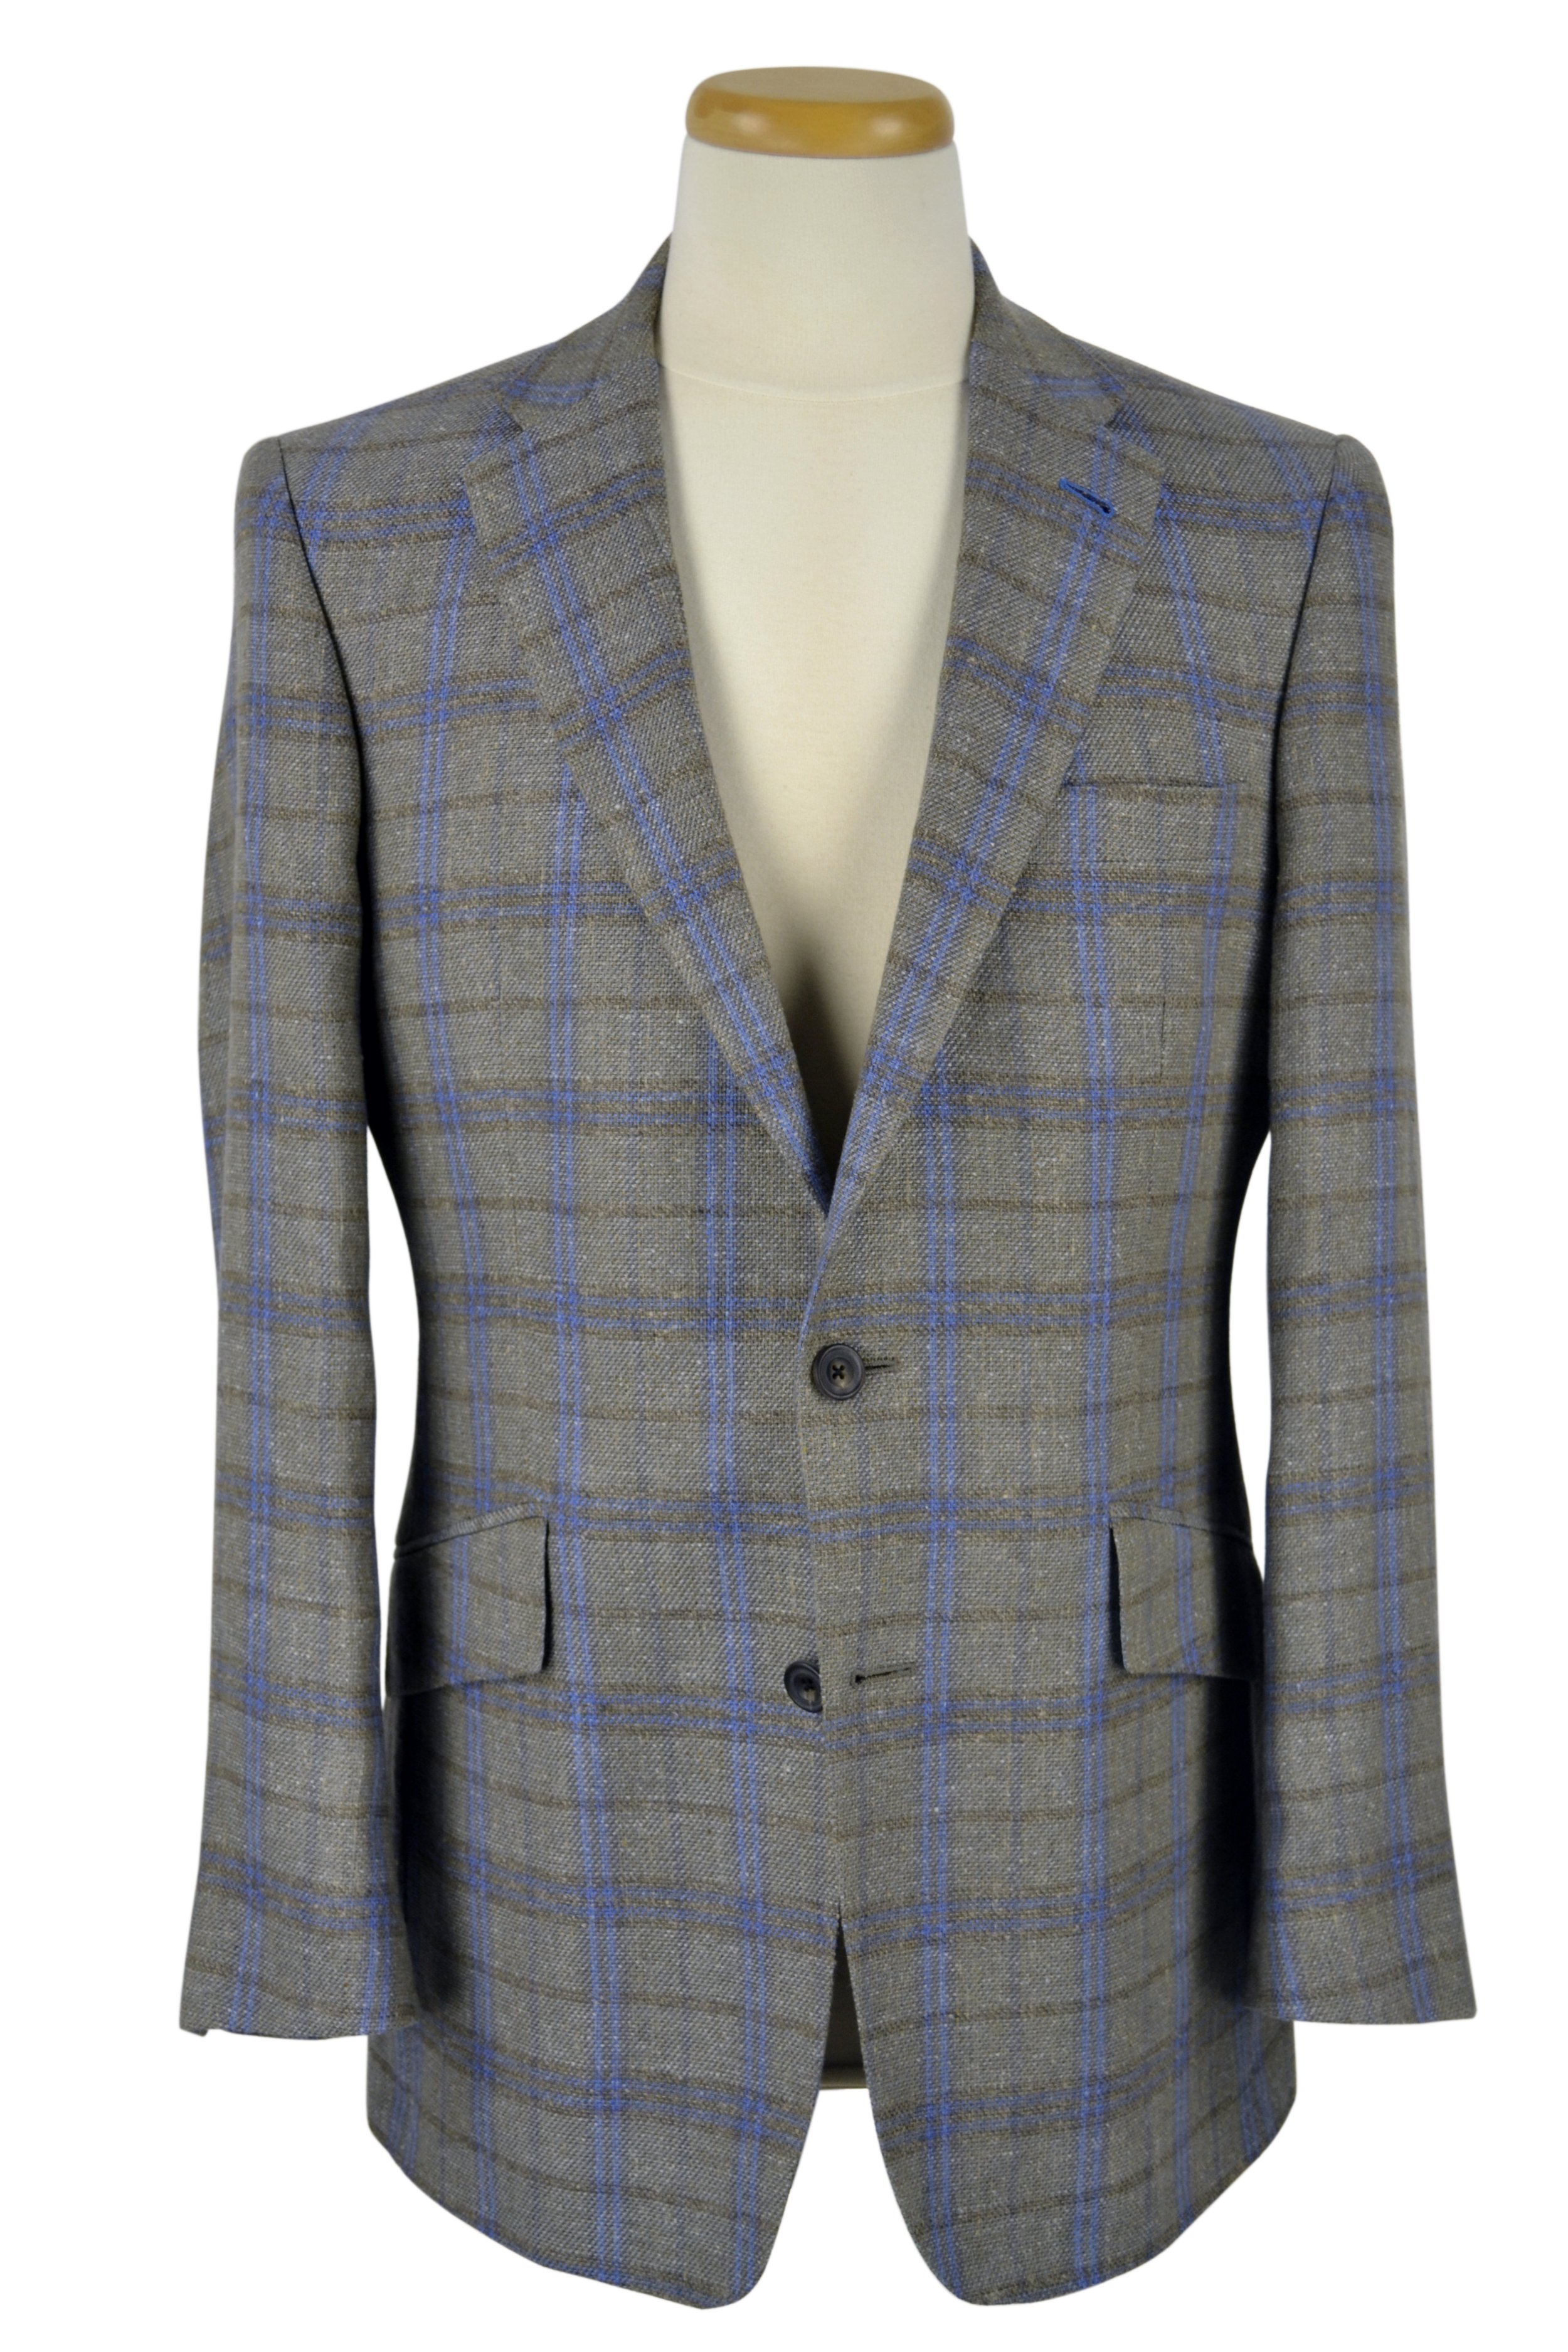 Jackets & Suits — C.D. Rigden & Son Country Classics